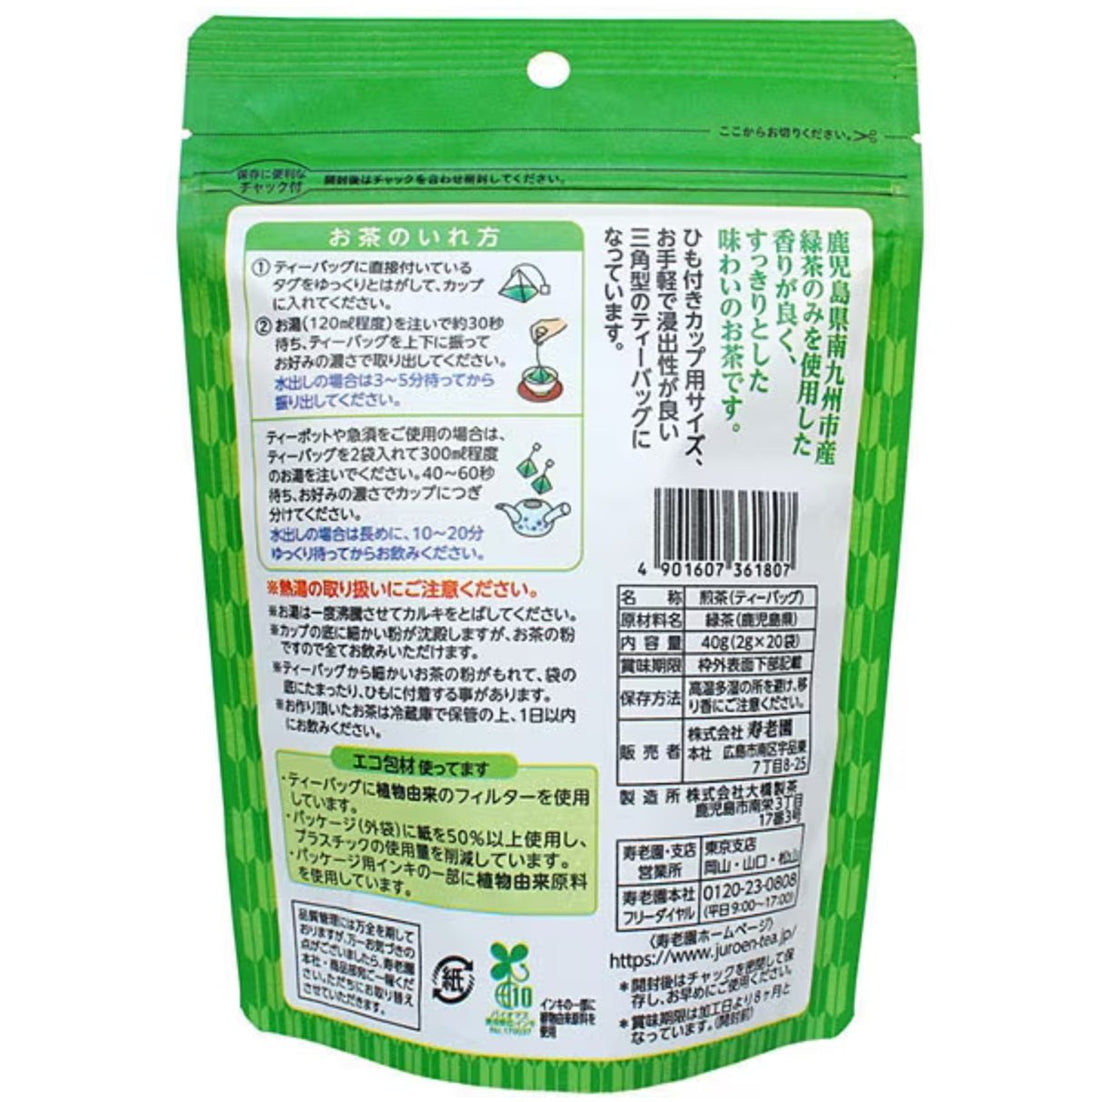 Juroen tea production area finished Chiran green tea tea bags 2g x 20 bags - NihonMura